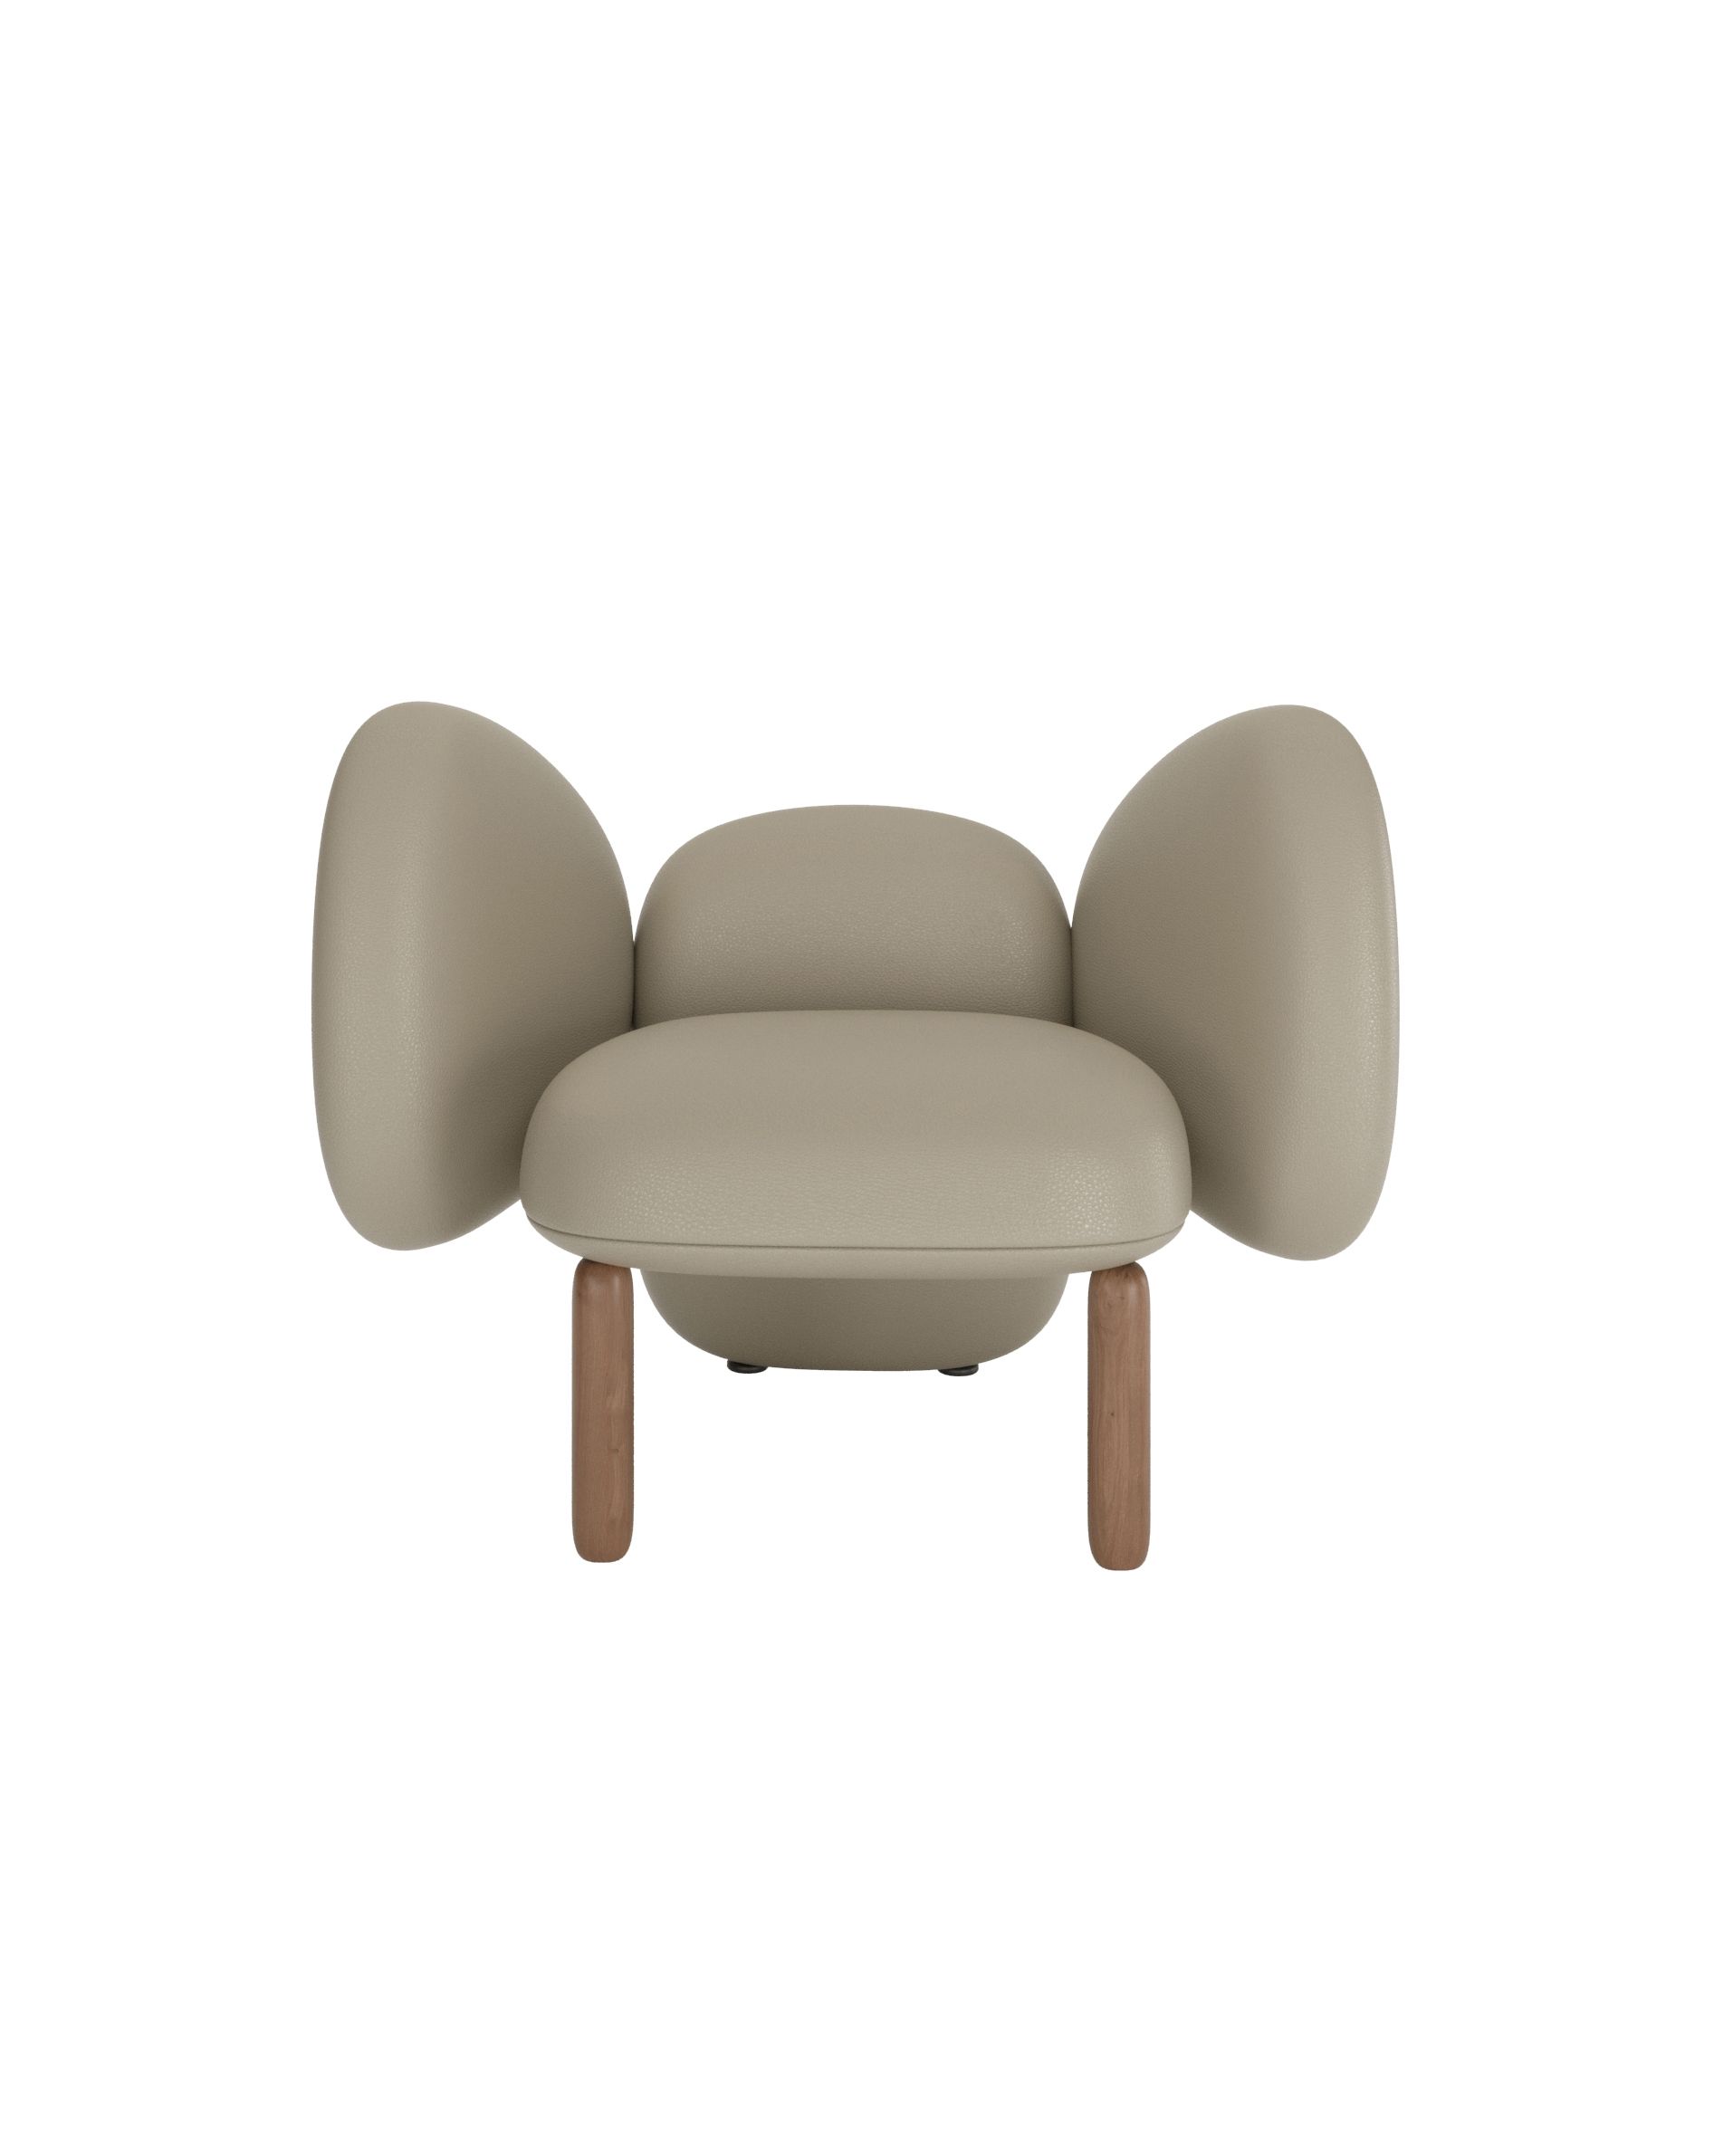 Dumbo Chair